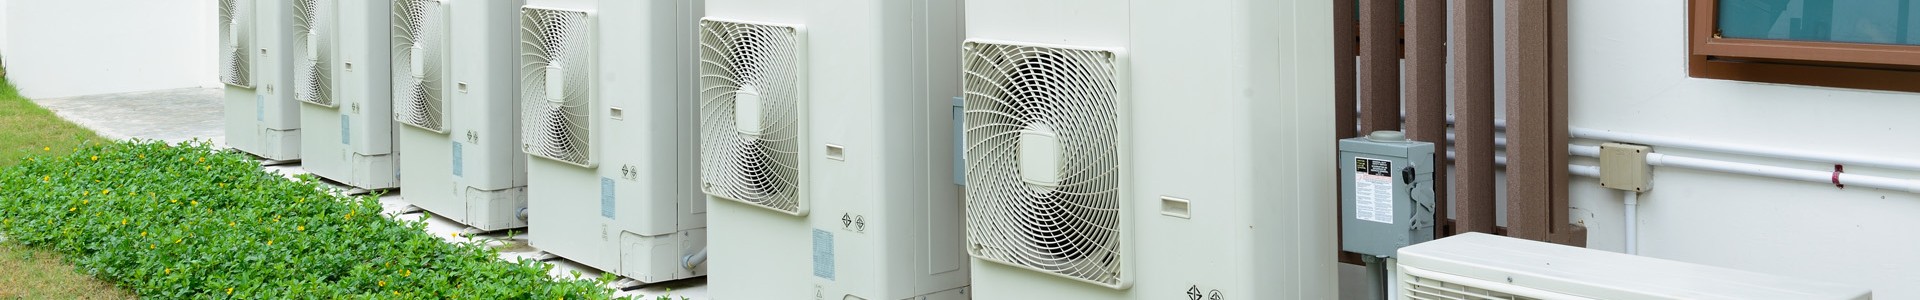 Poway Air Conditioning Repair